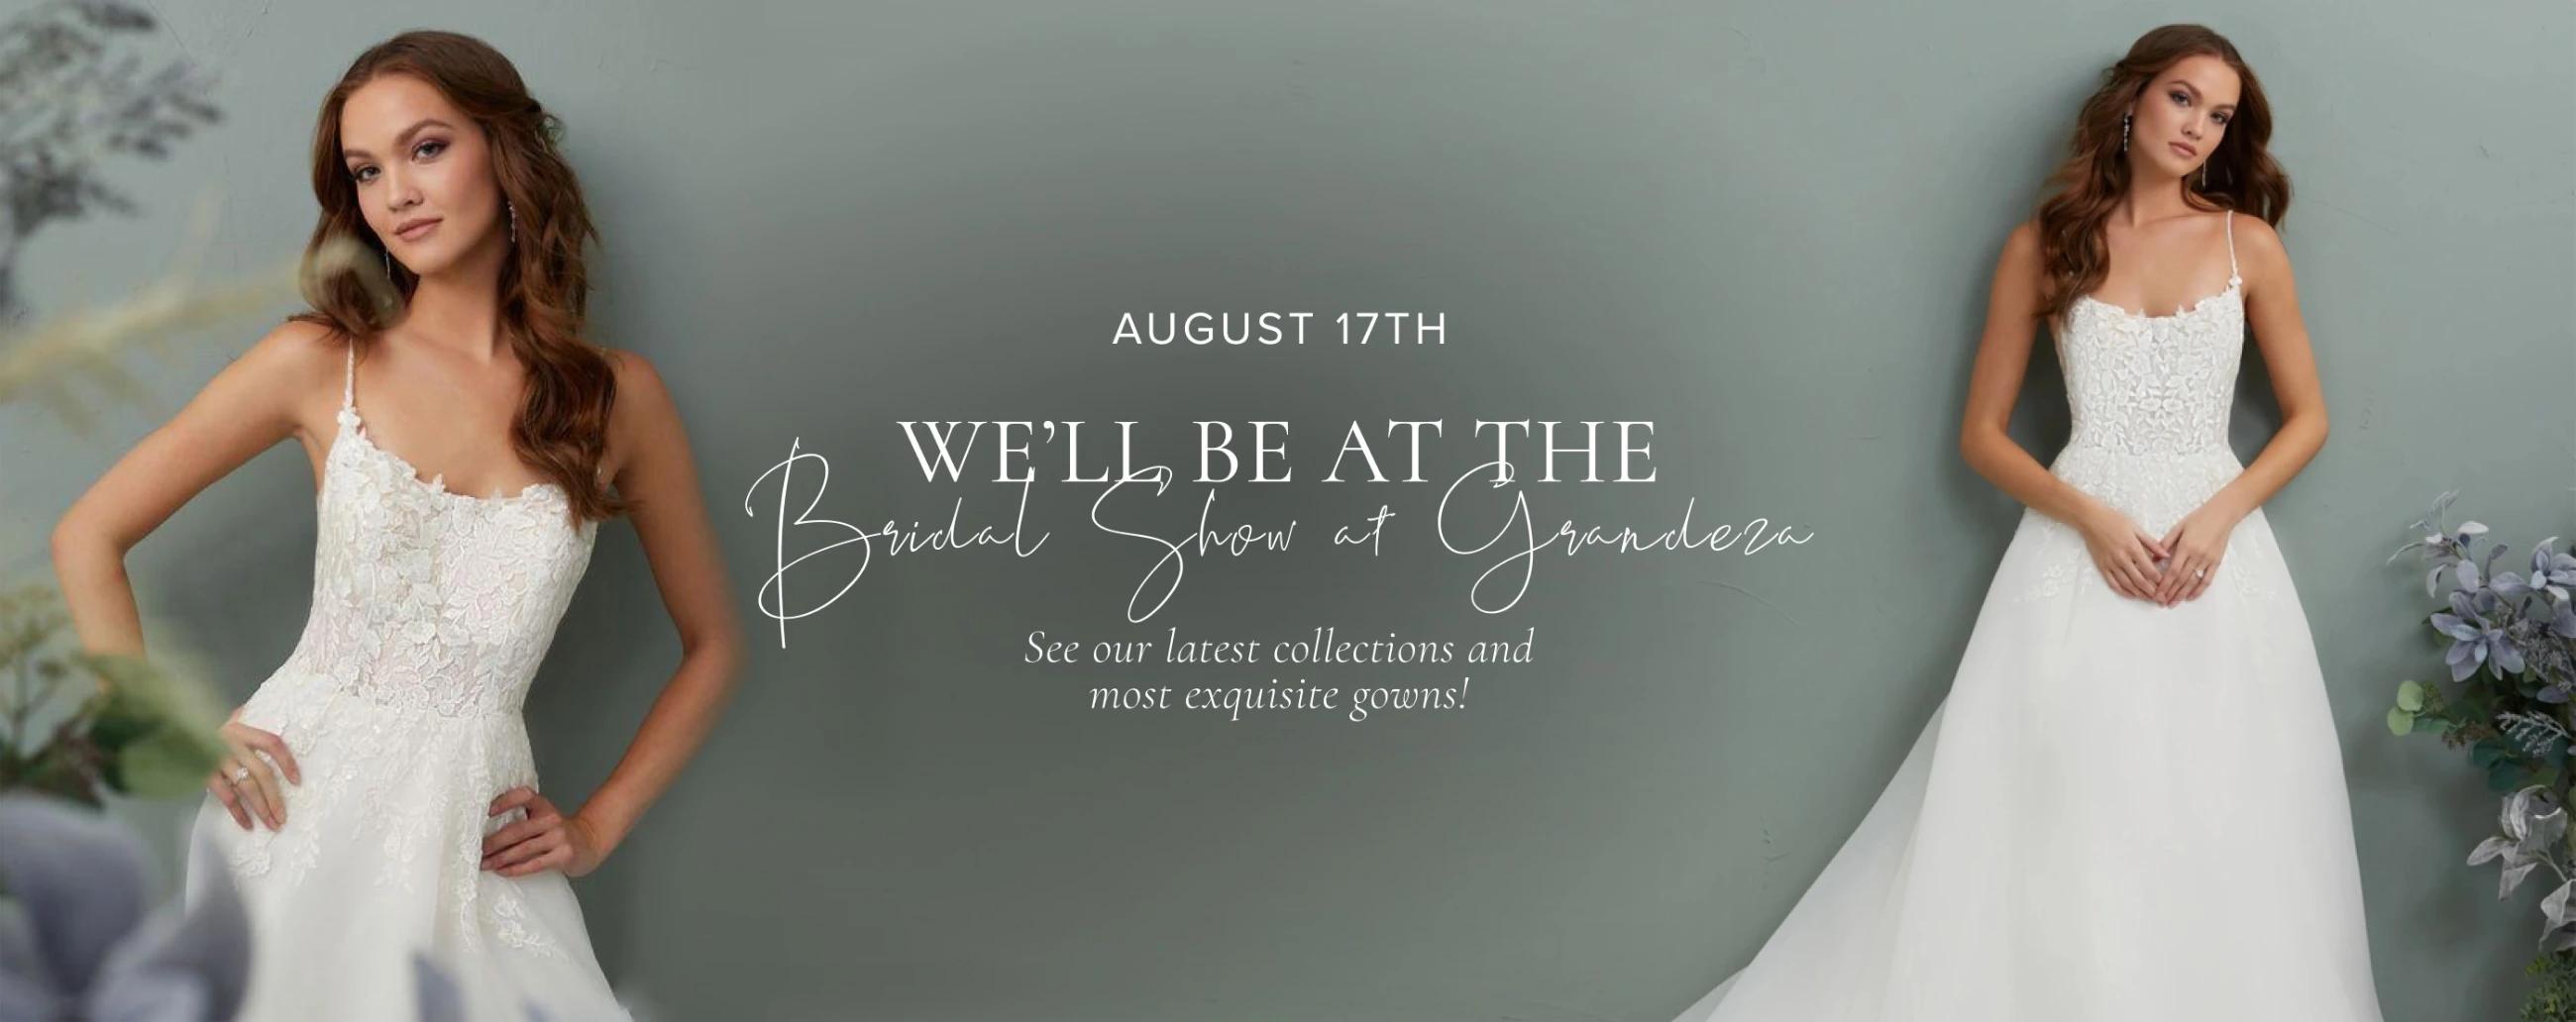 Bridal Show August event banner for desktop